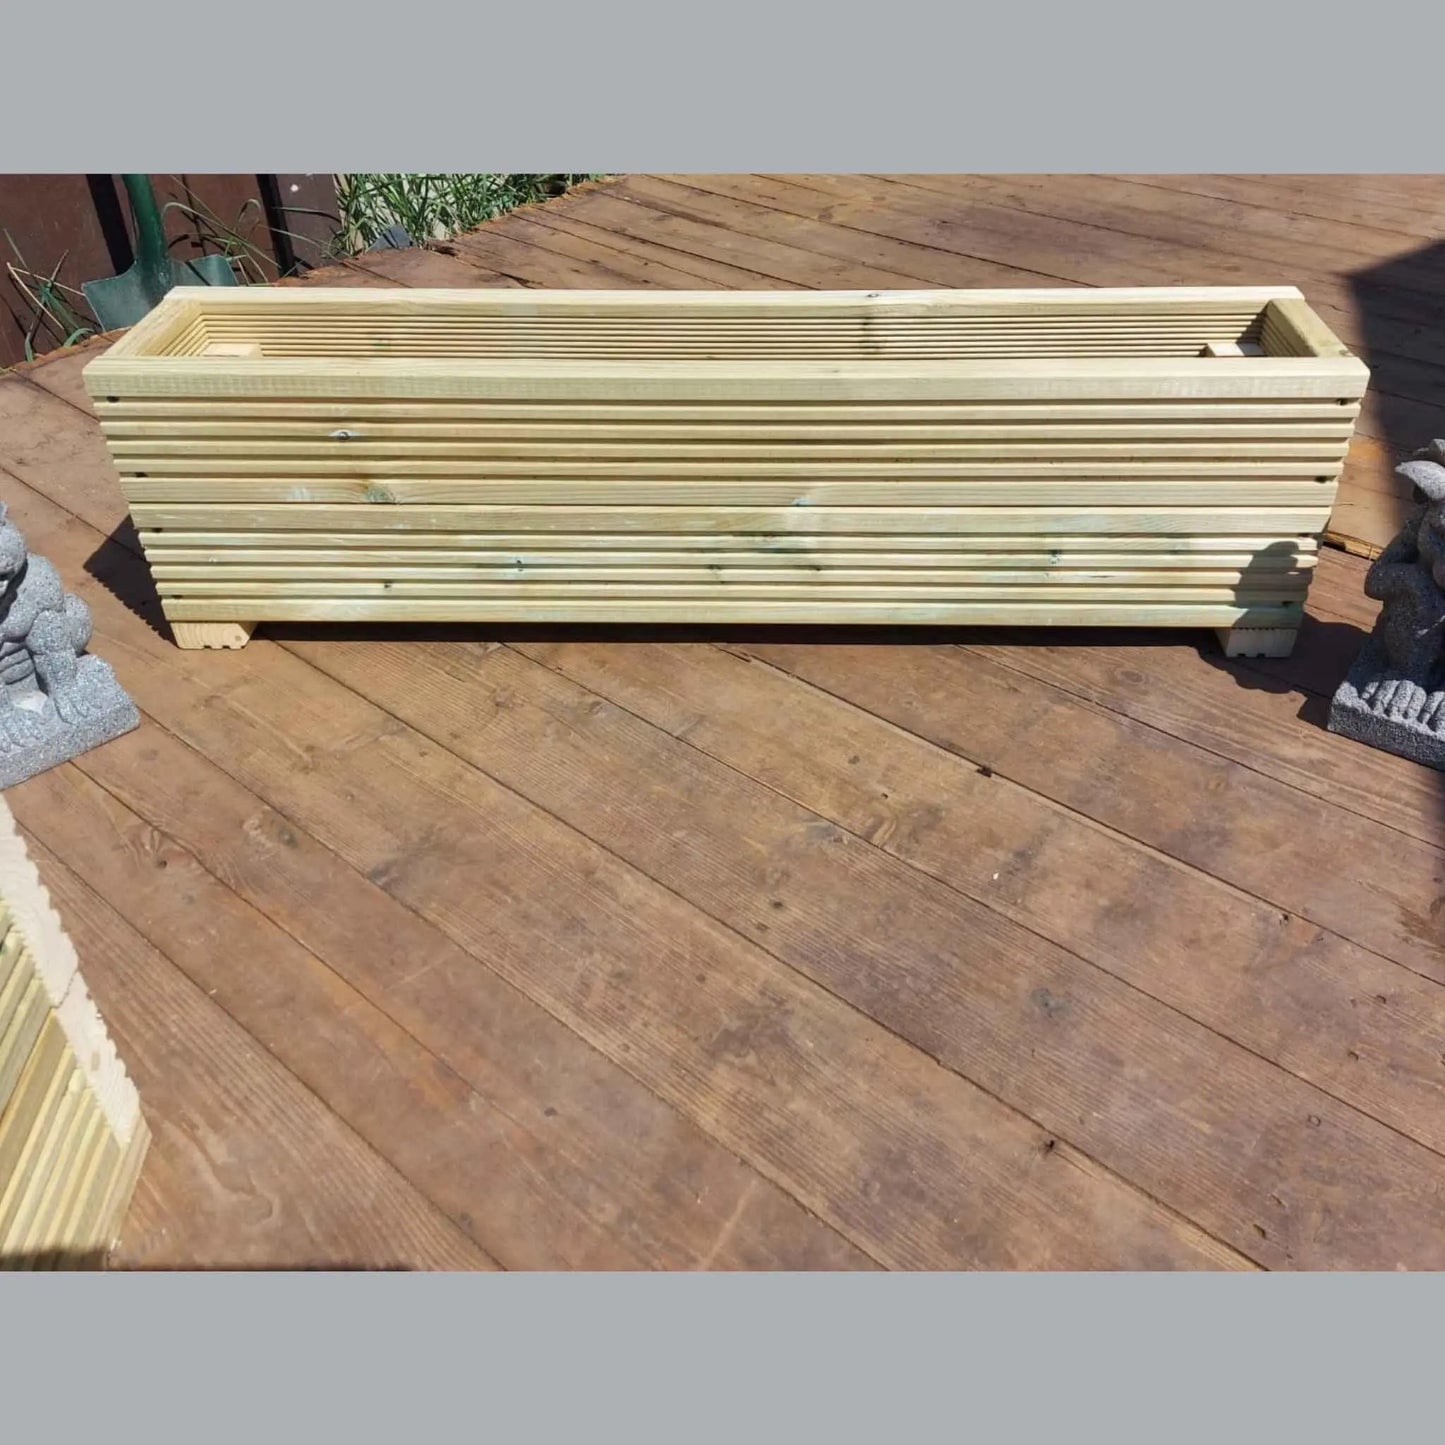 90cm long double tier wooden decking planter - Summer Wooden Planters